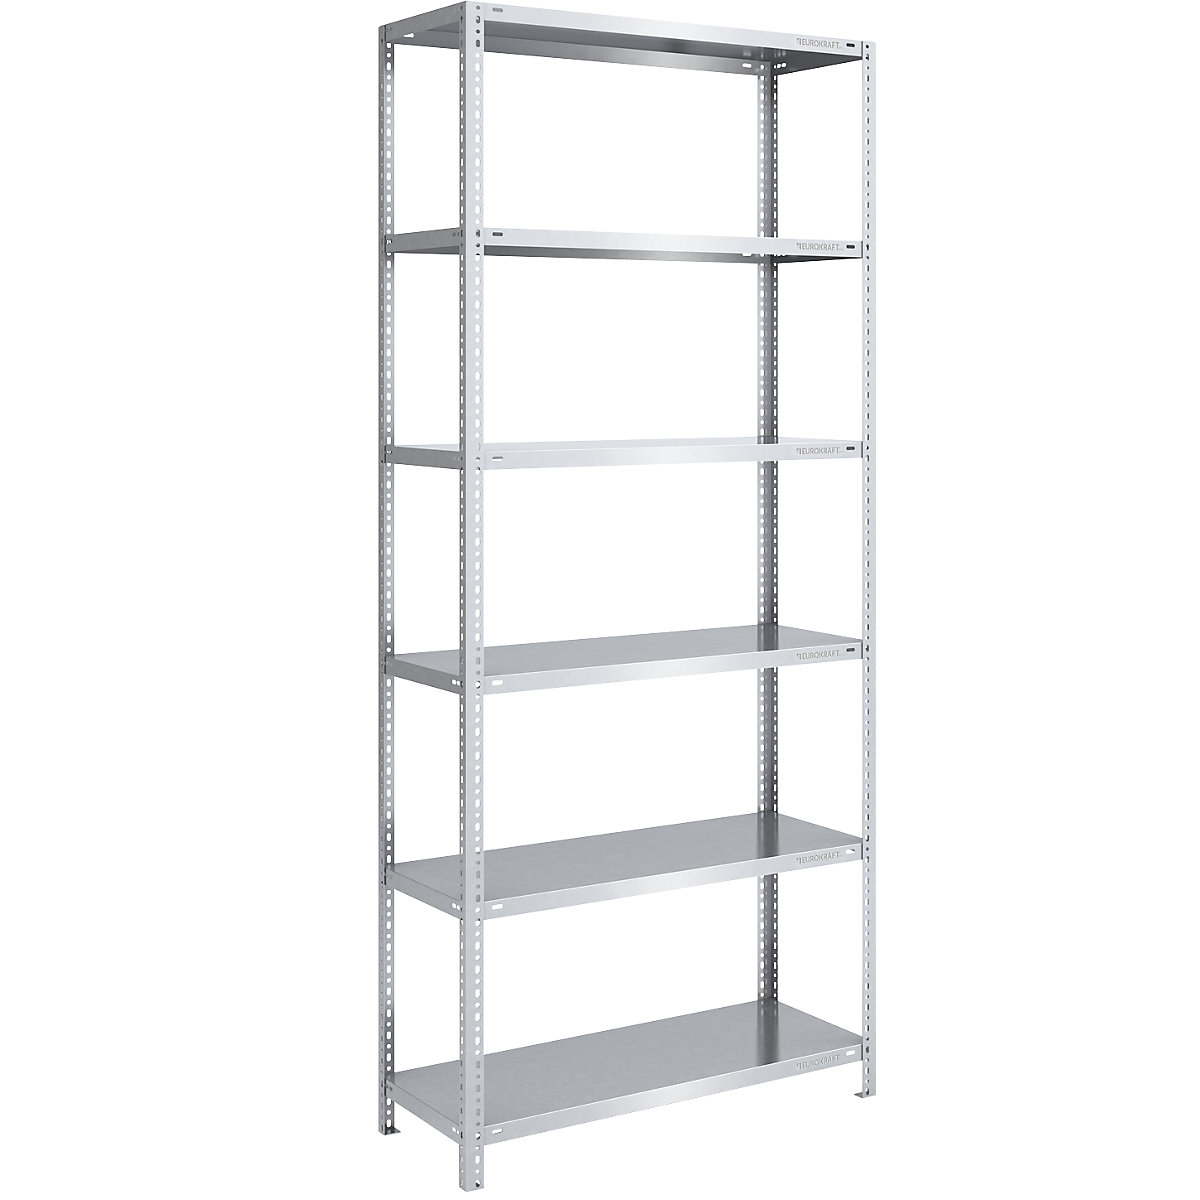 Bolt-together shelf unit, light duty, zinc plated – eurokraft pro, shelf unit height 2500 mm, shelf width 1000 mm, depth 500 mm, standard shelf unit-9